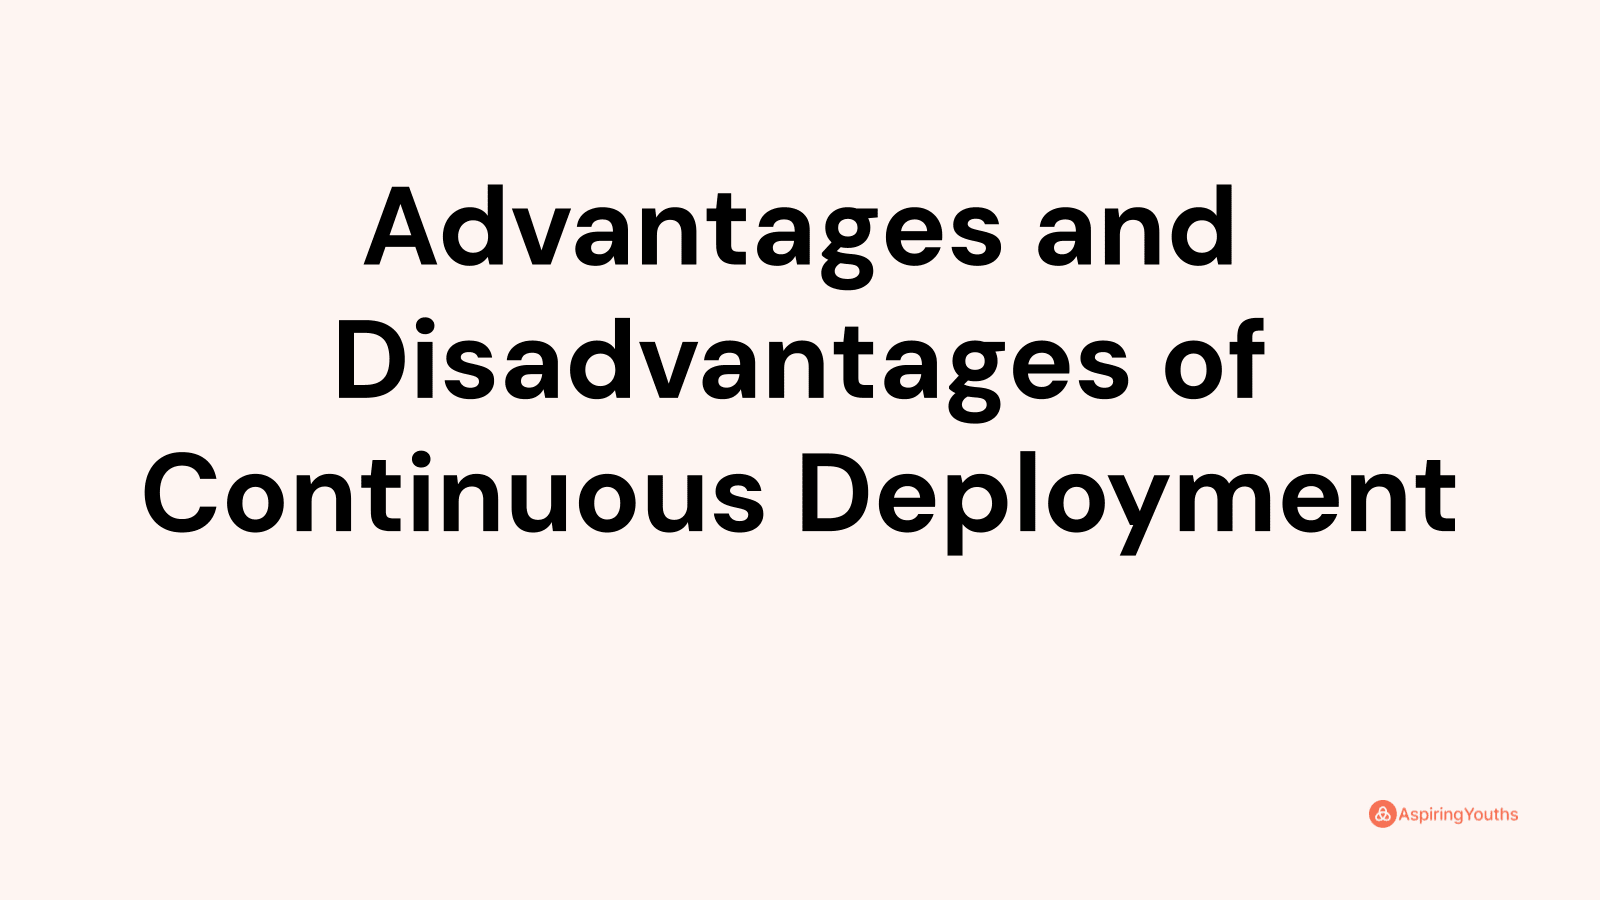 Advantages and disadvantages of Continuous Deployment